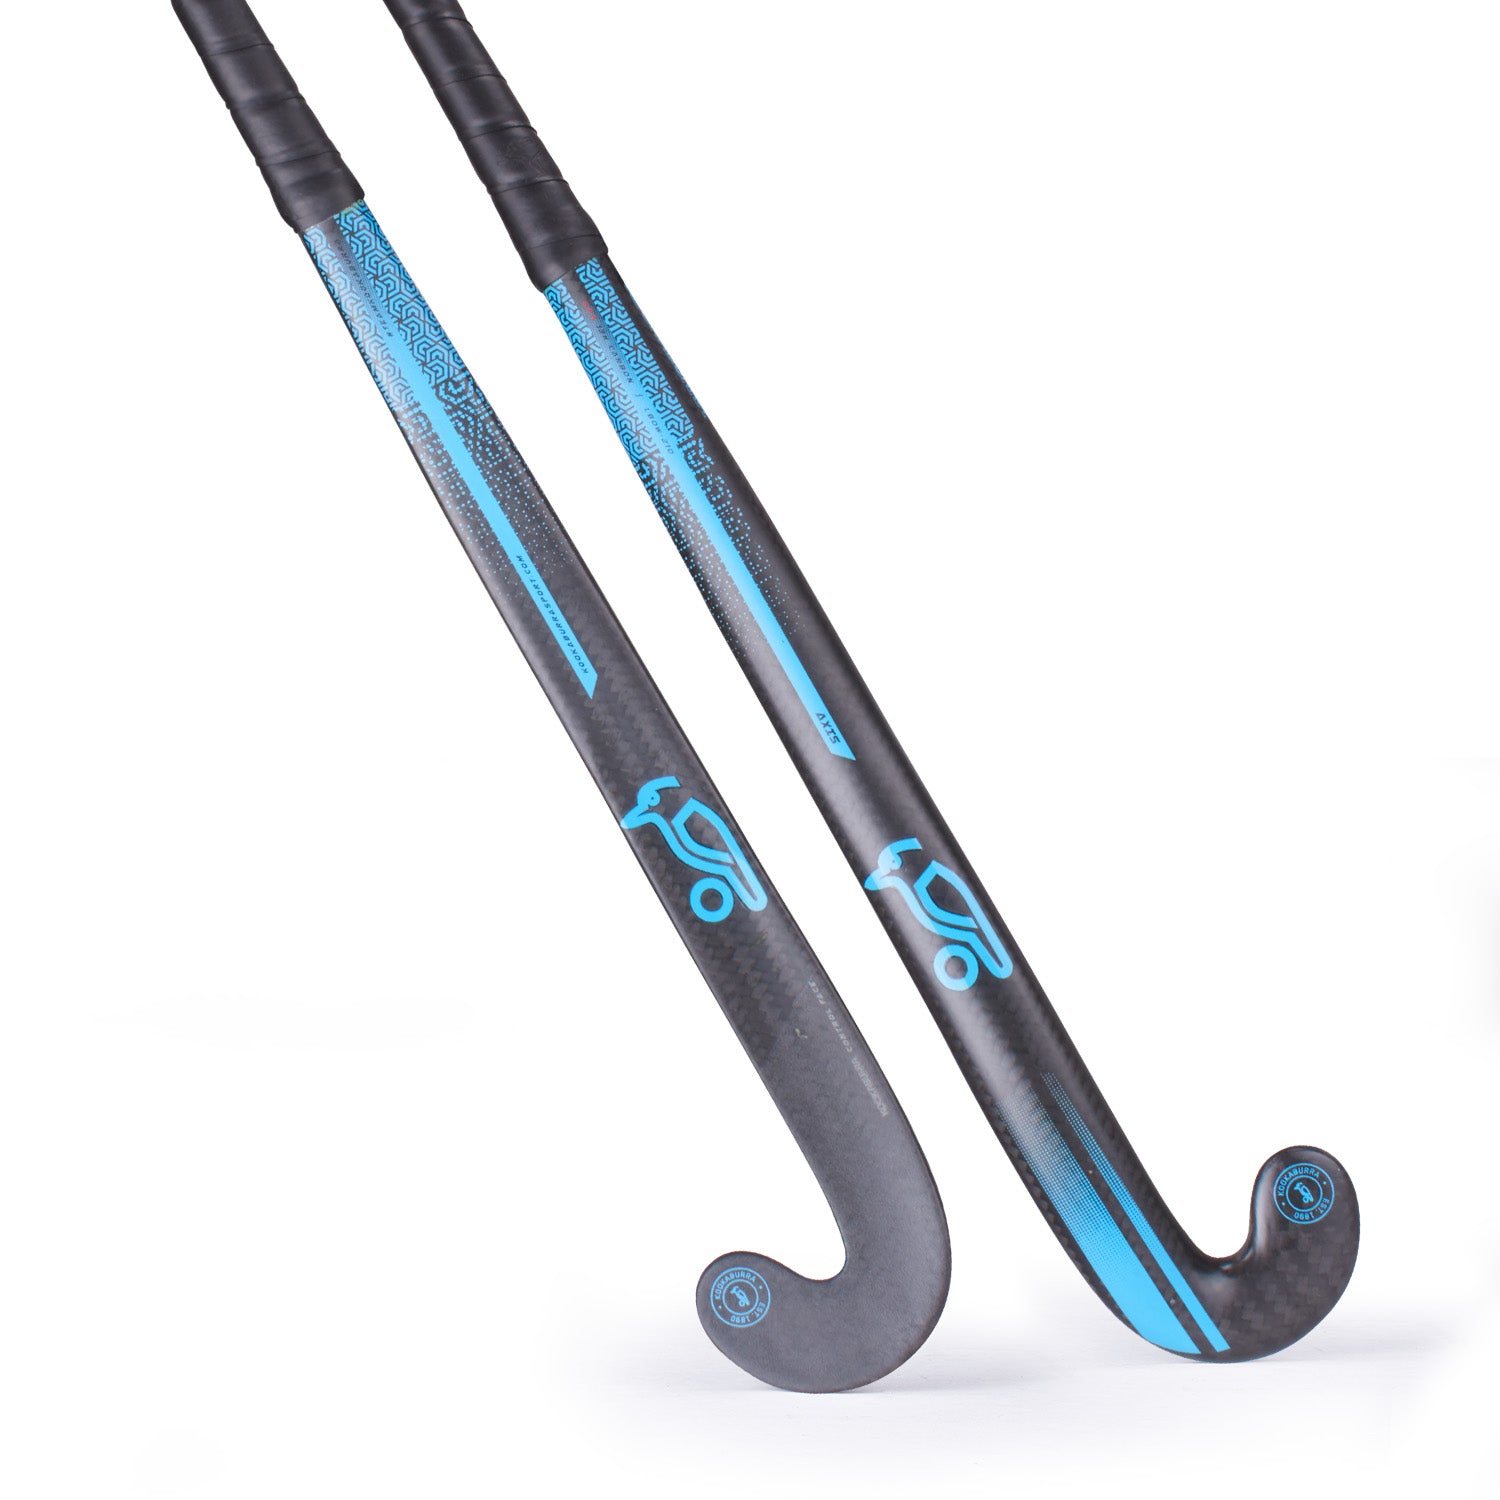 Kookaburra Axis L-Bow 37.5 Light Hockey Stick